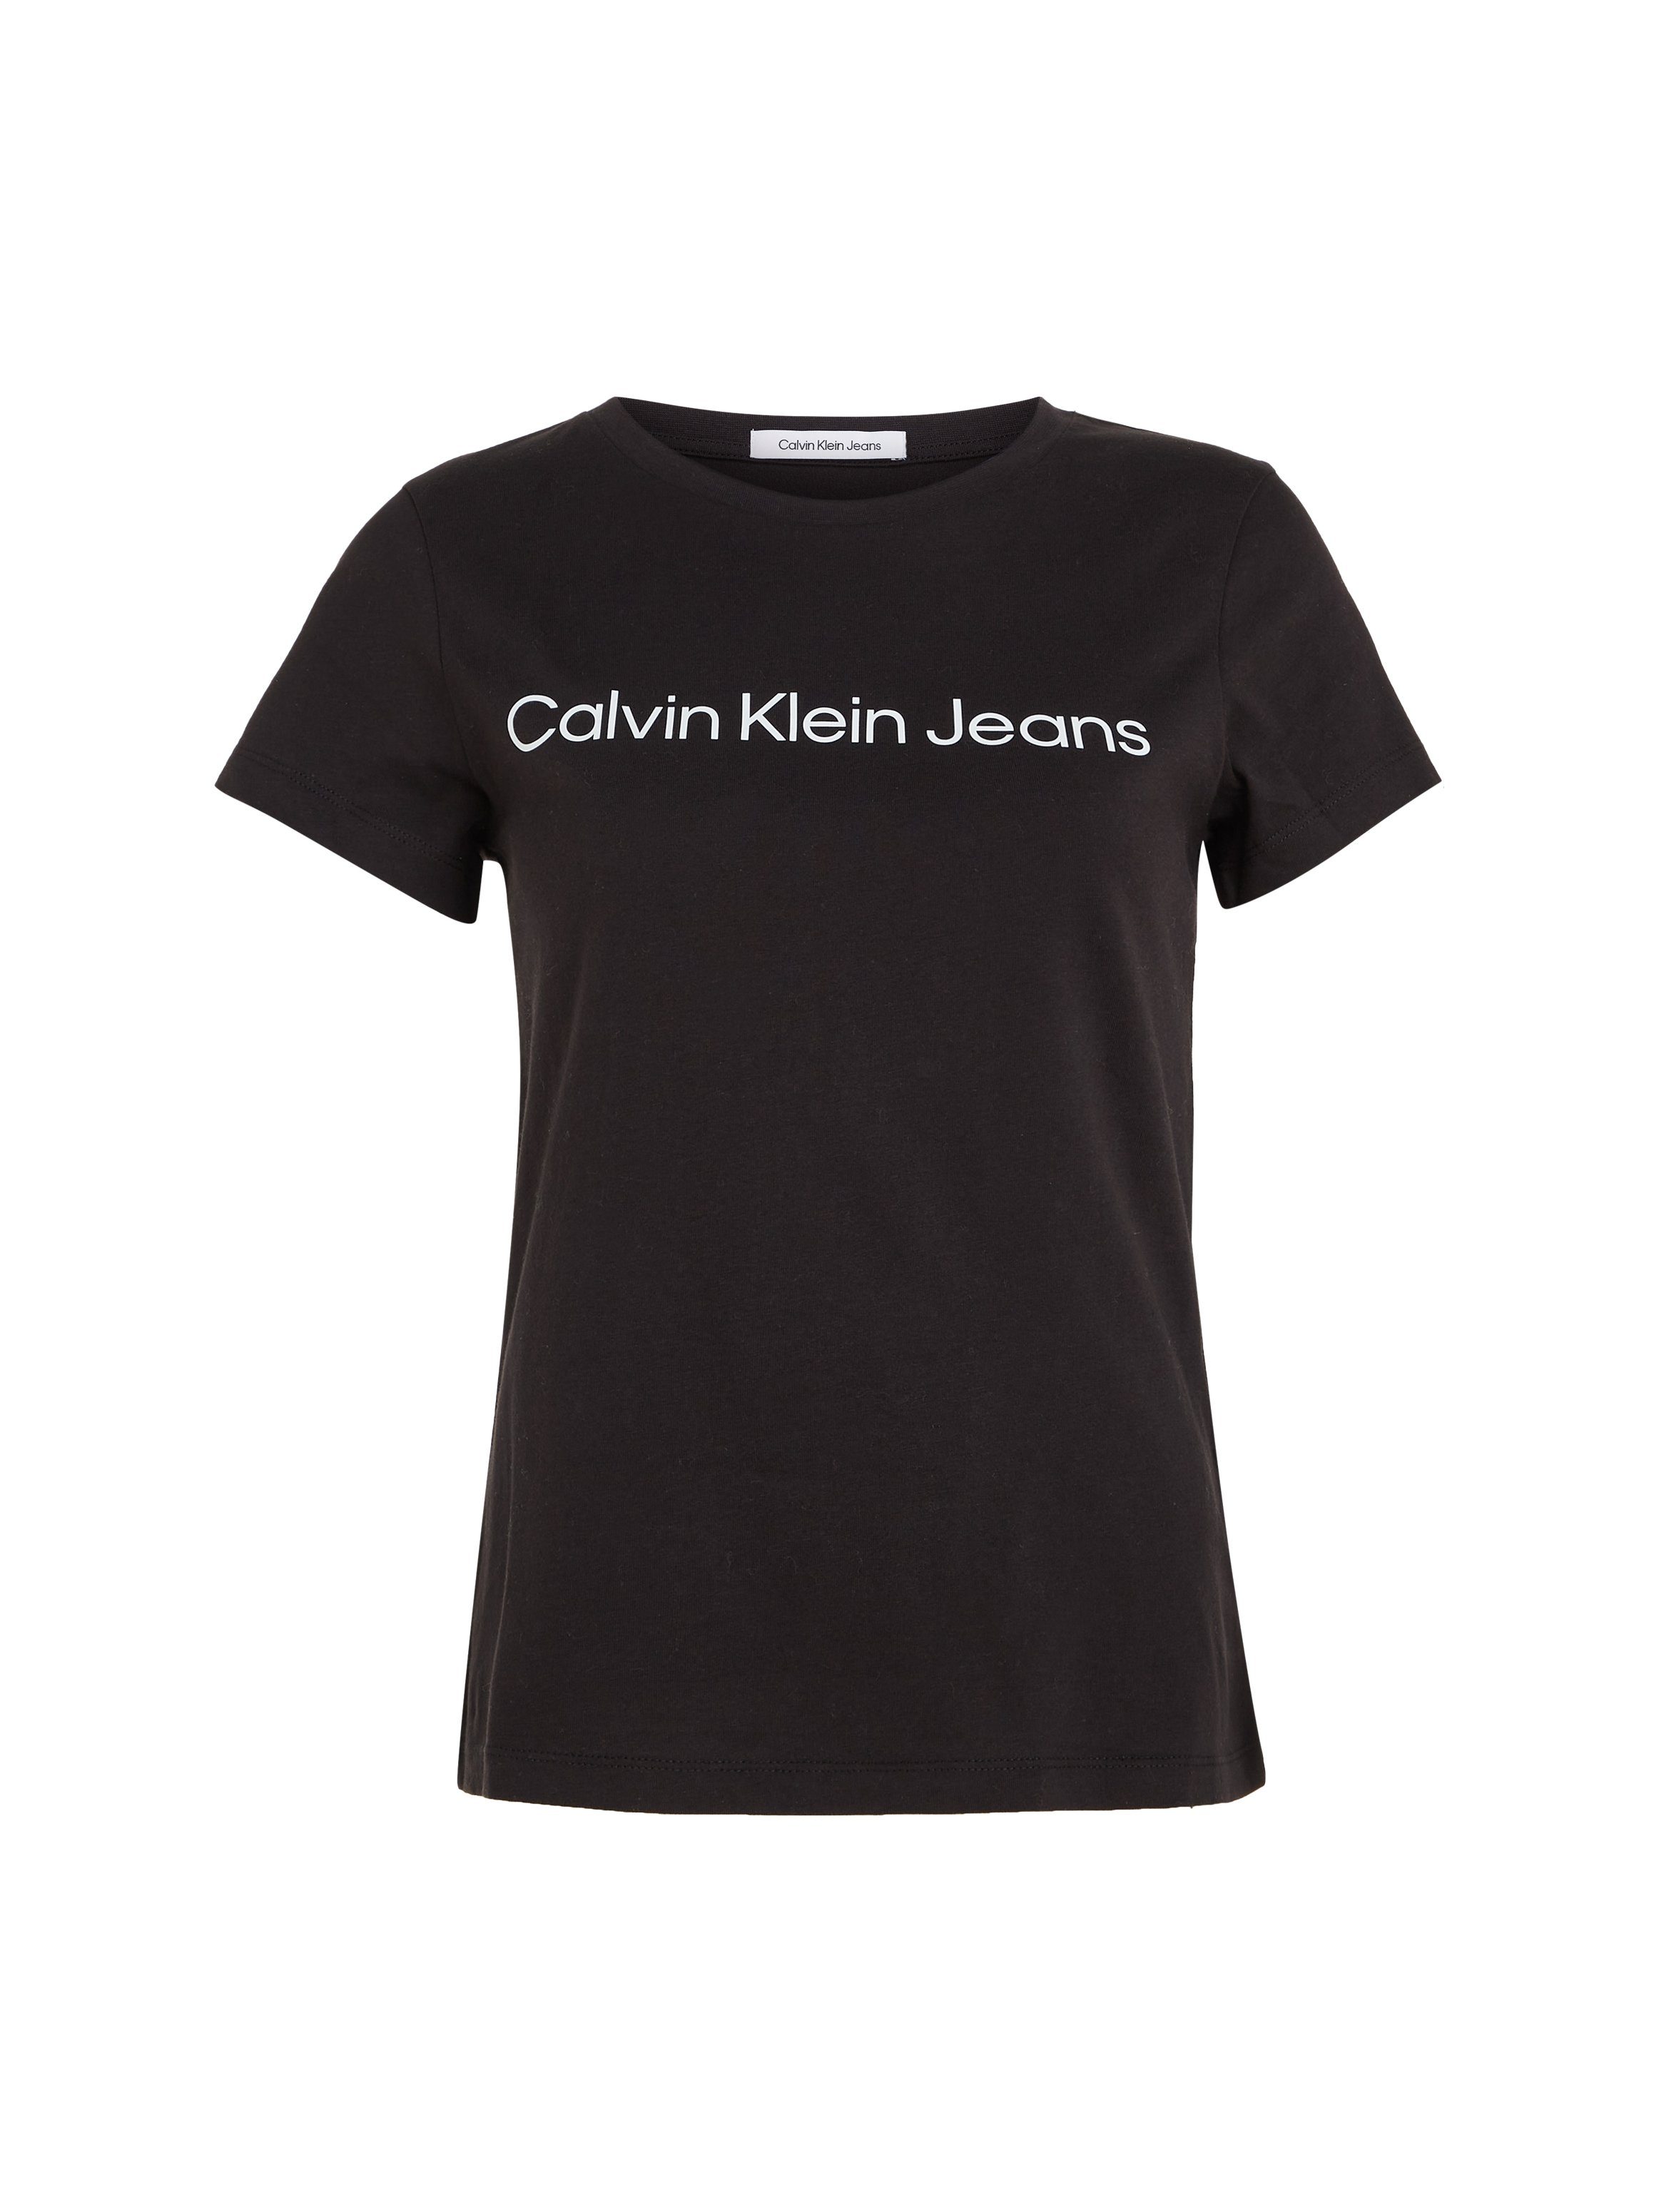 Calvin Klein SLIM LOGO Jeans TEE T-Shirt CK-Logoschriftzug Black CORE FIT Ck INSTIT mit